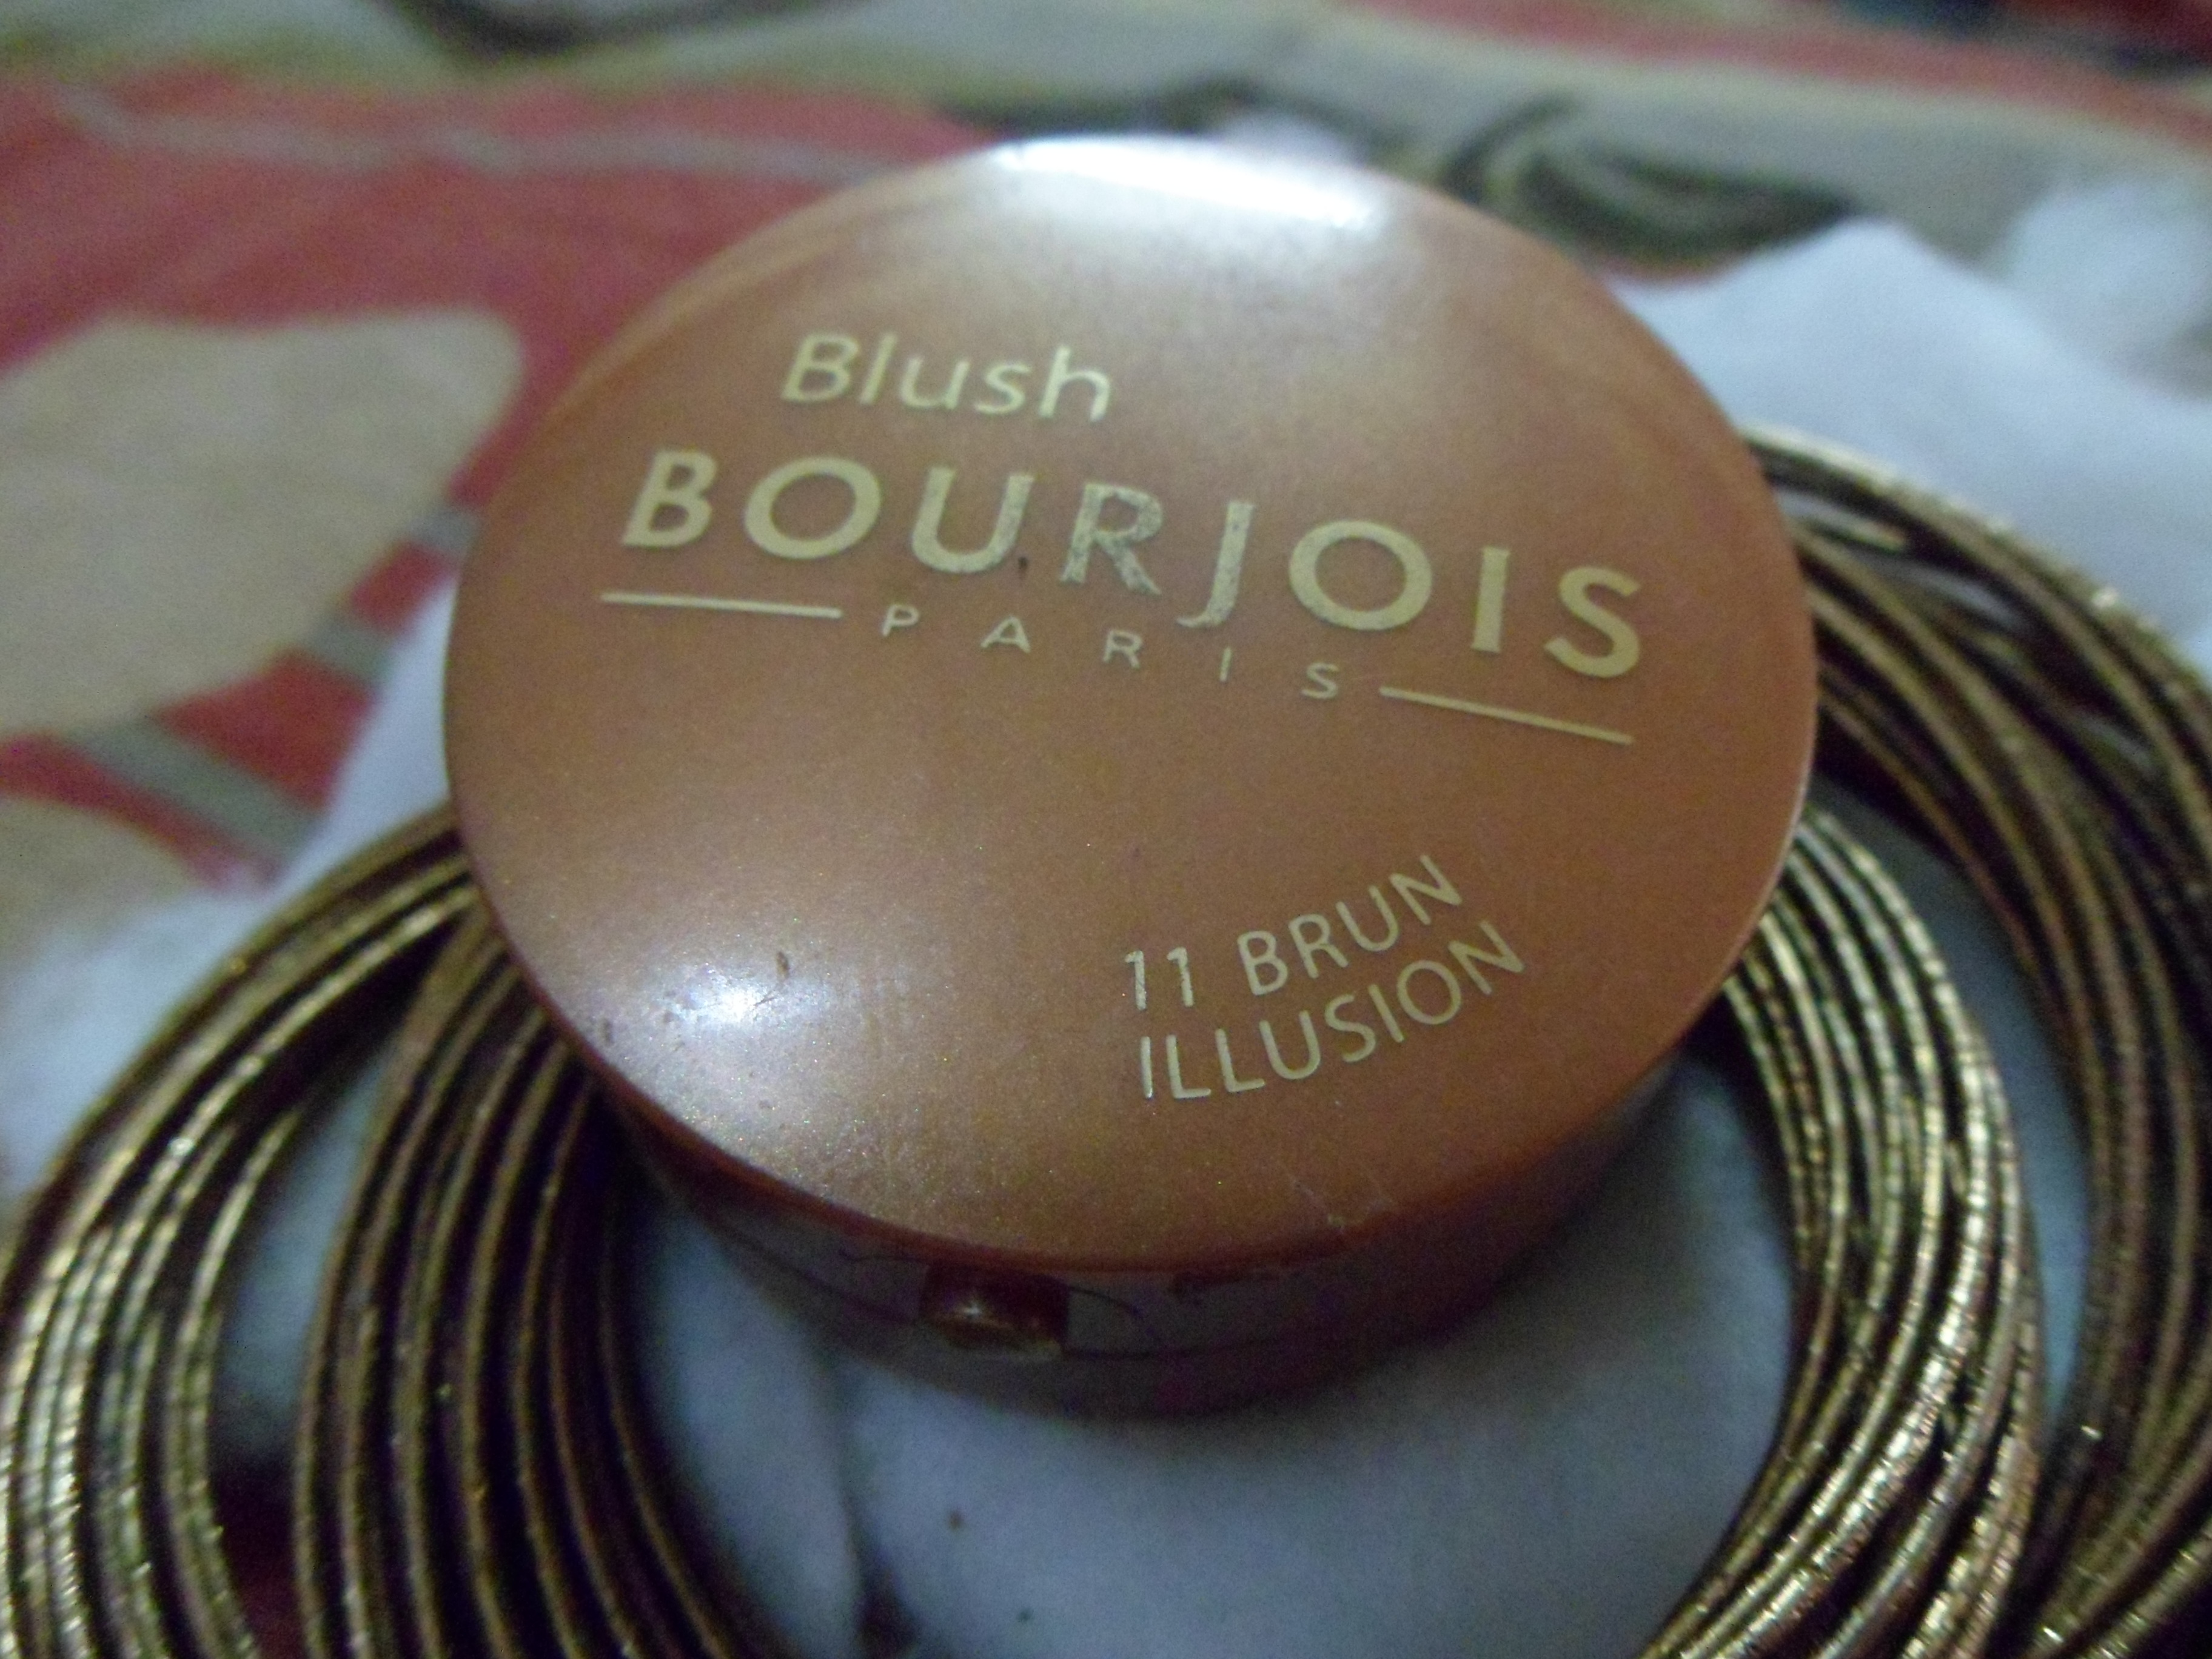 Bourjois Blush 11 Brun Illusion Review